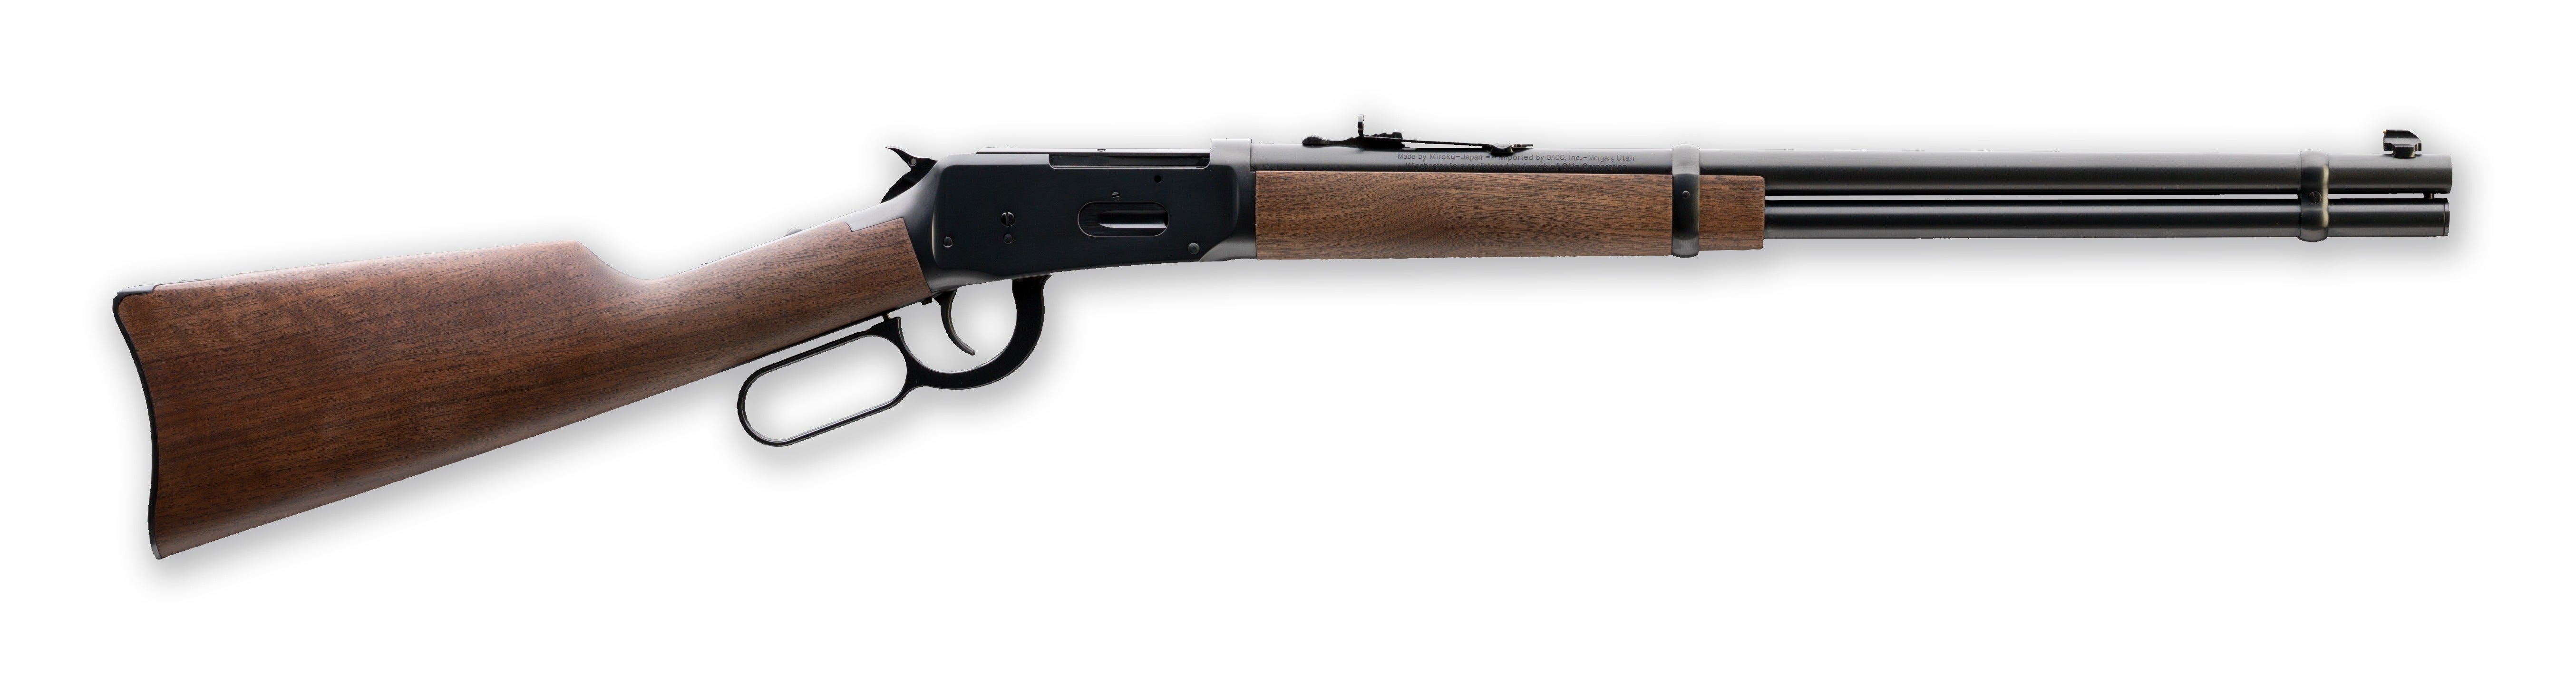 model-94-carbine